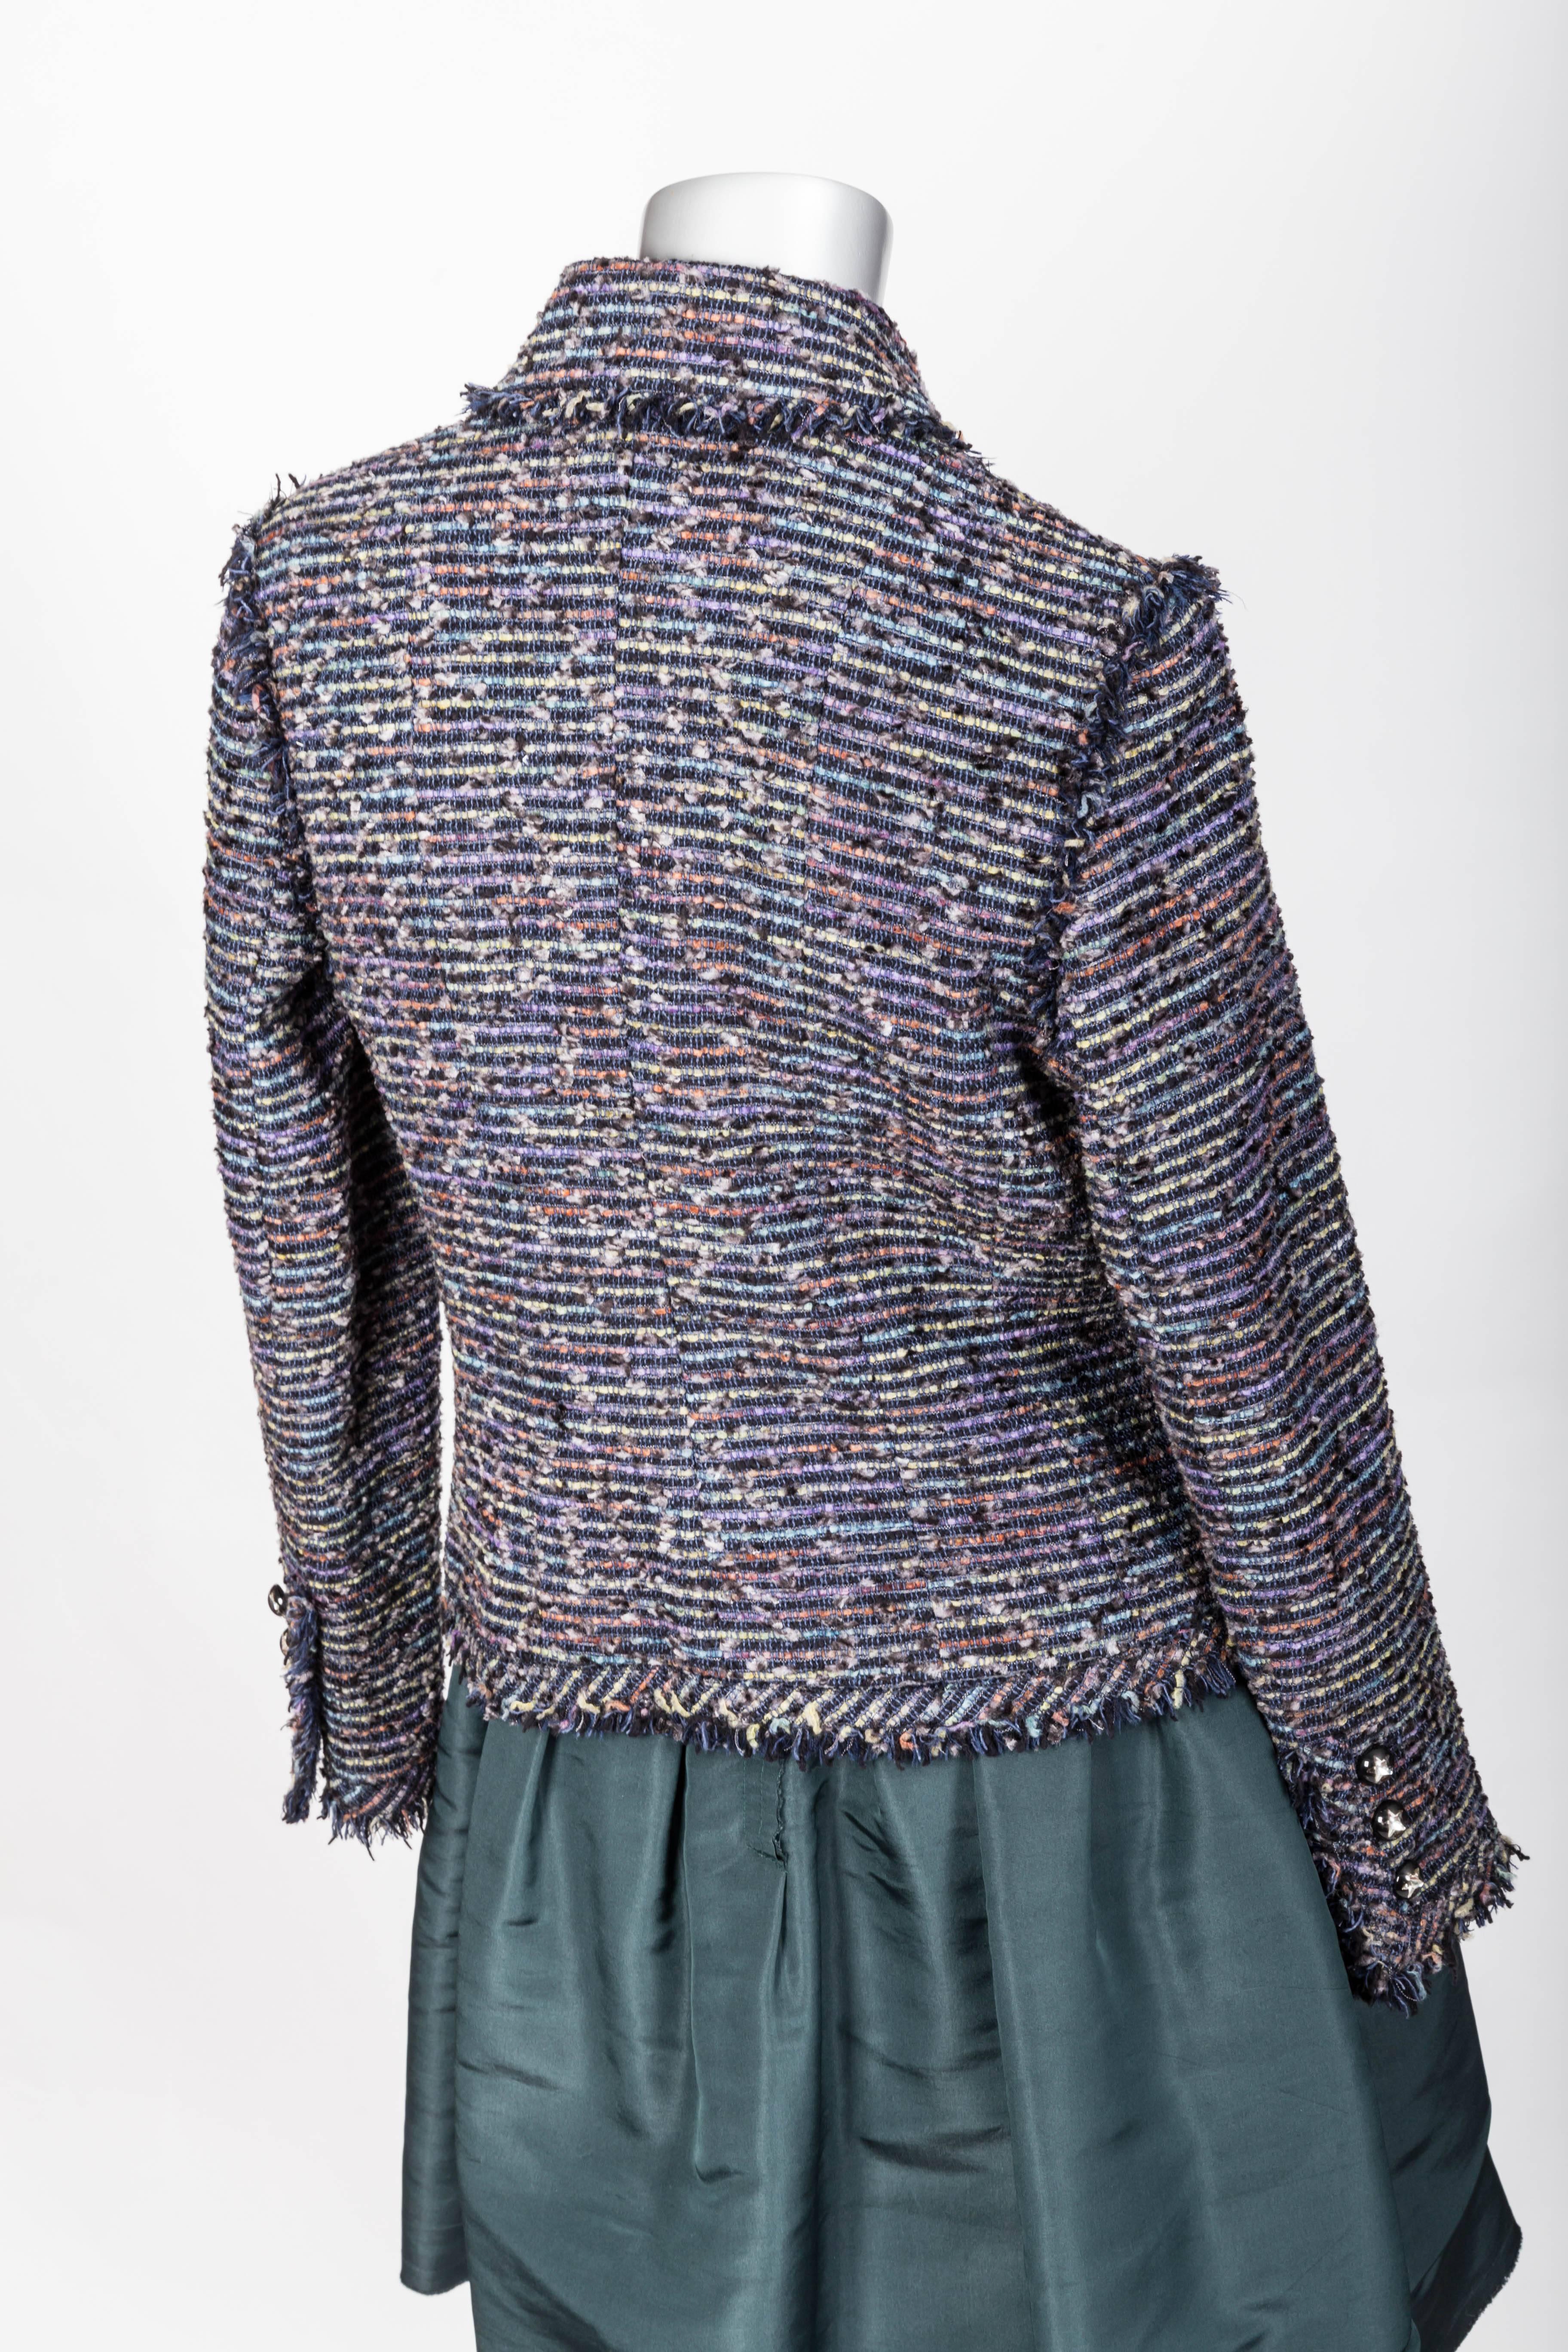 Chanel Tweed Jacket with Fringe Trim FR 40 / US 8 3